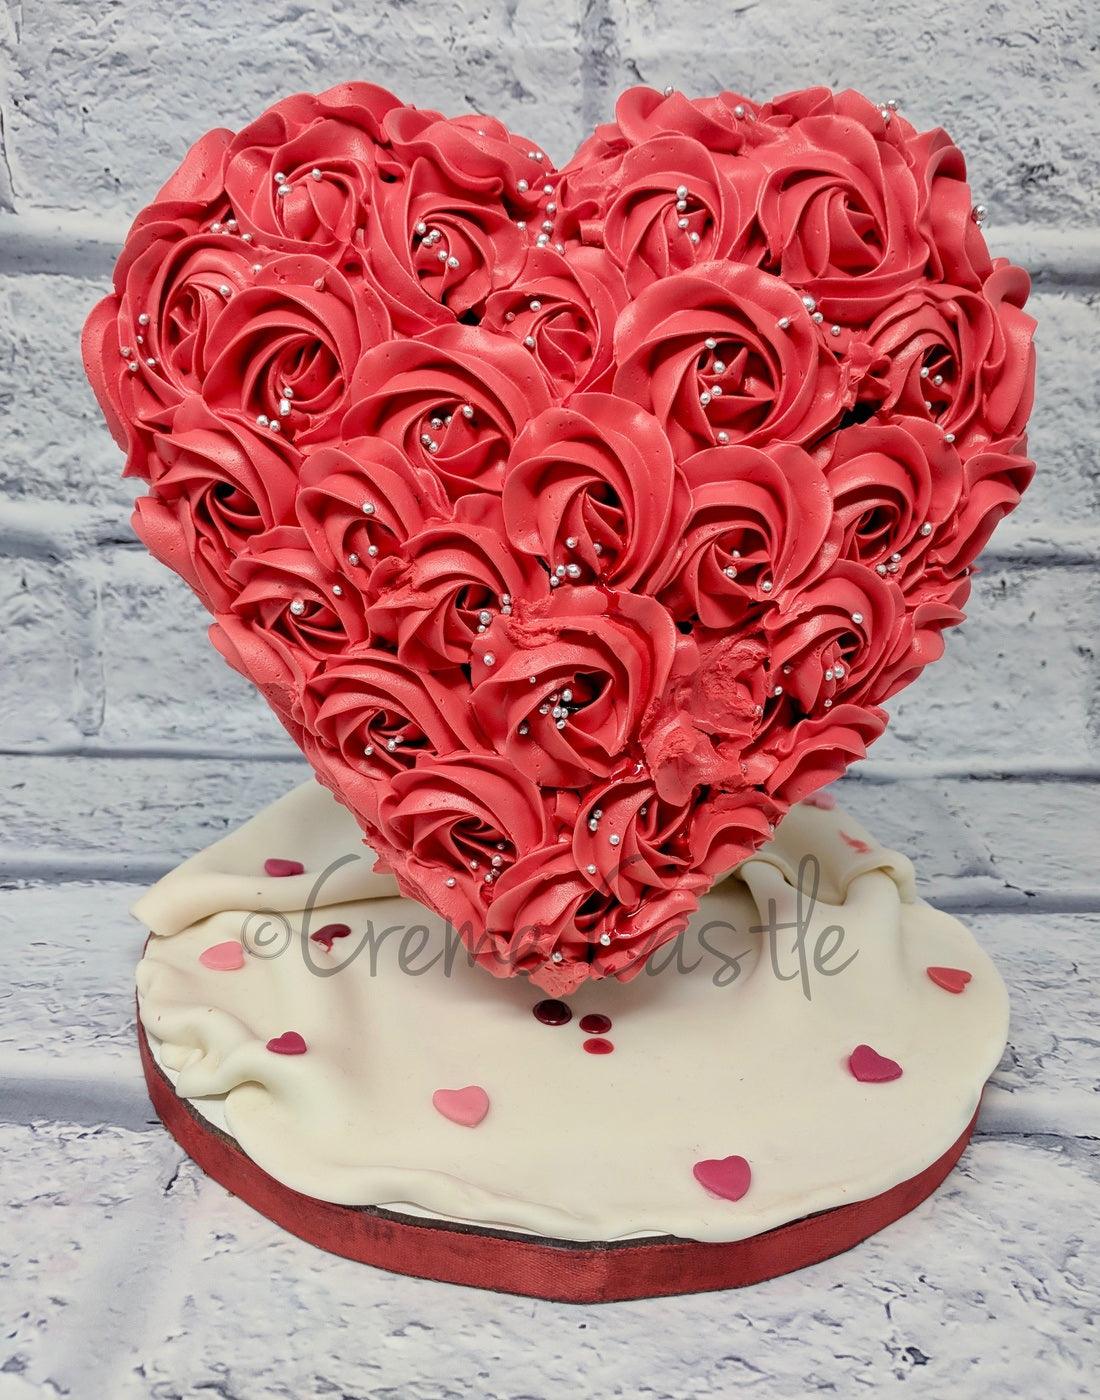 Heart Shaped Cakes - Creme Castle